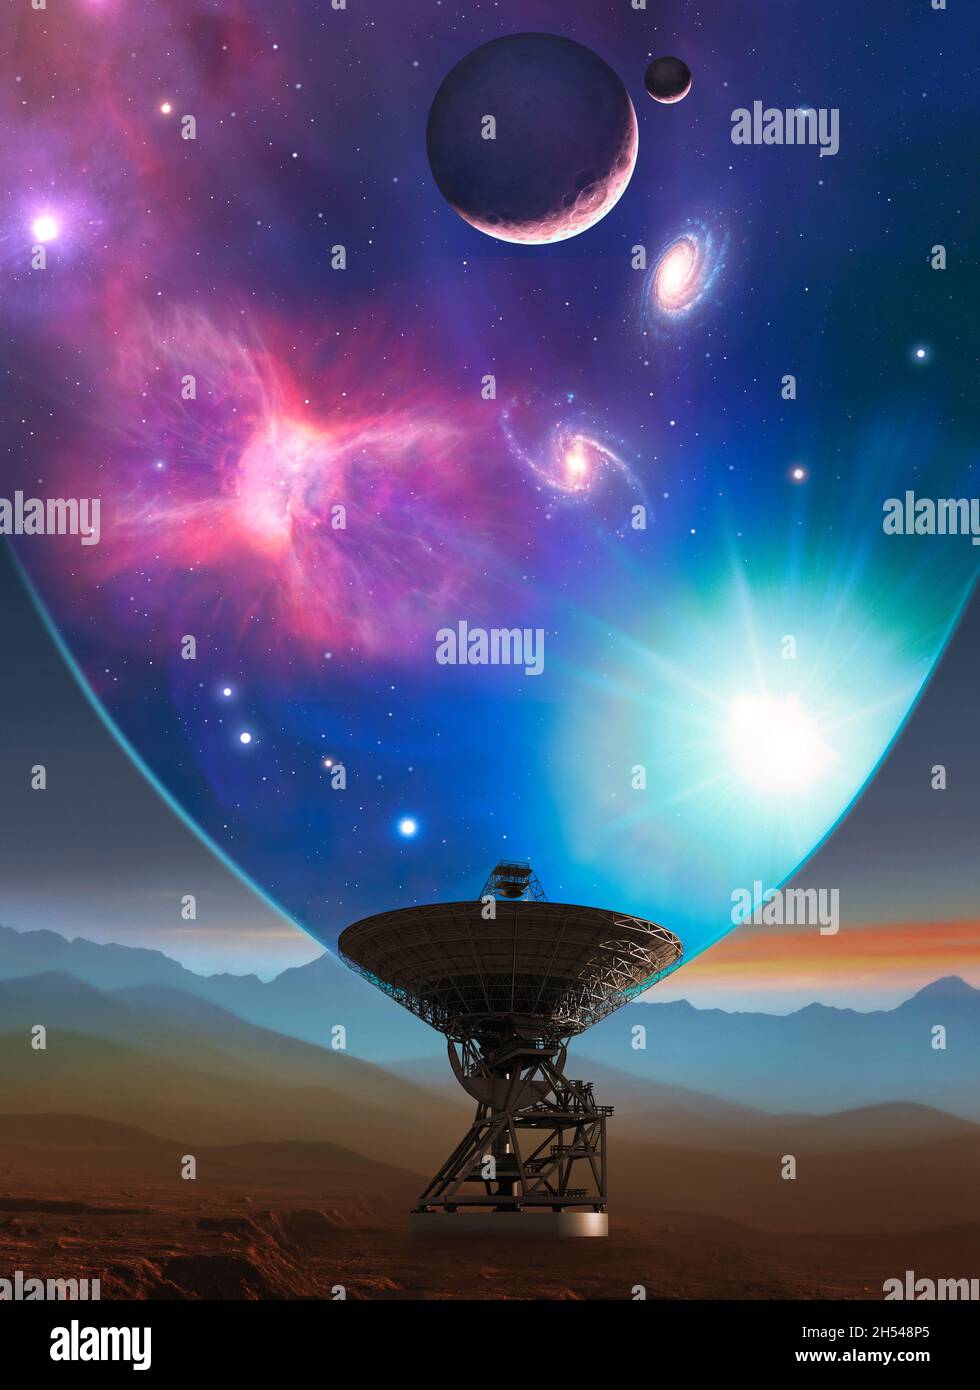 Teleskop im Universum, Illustration Stockfoto